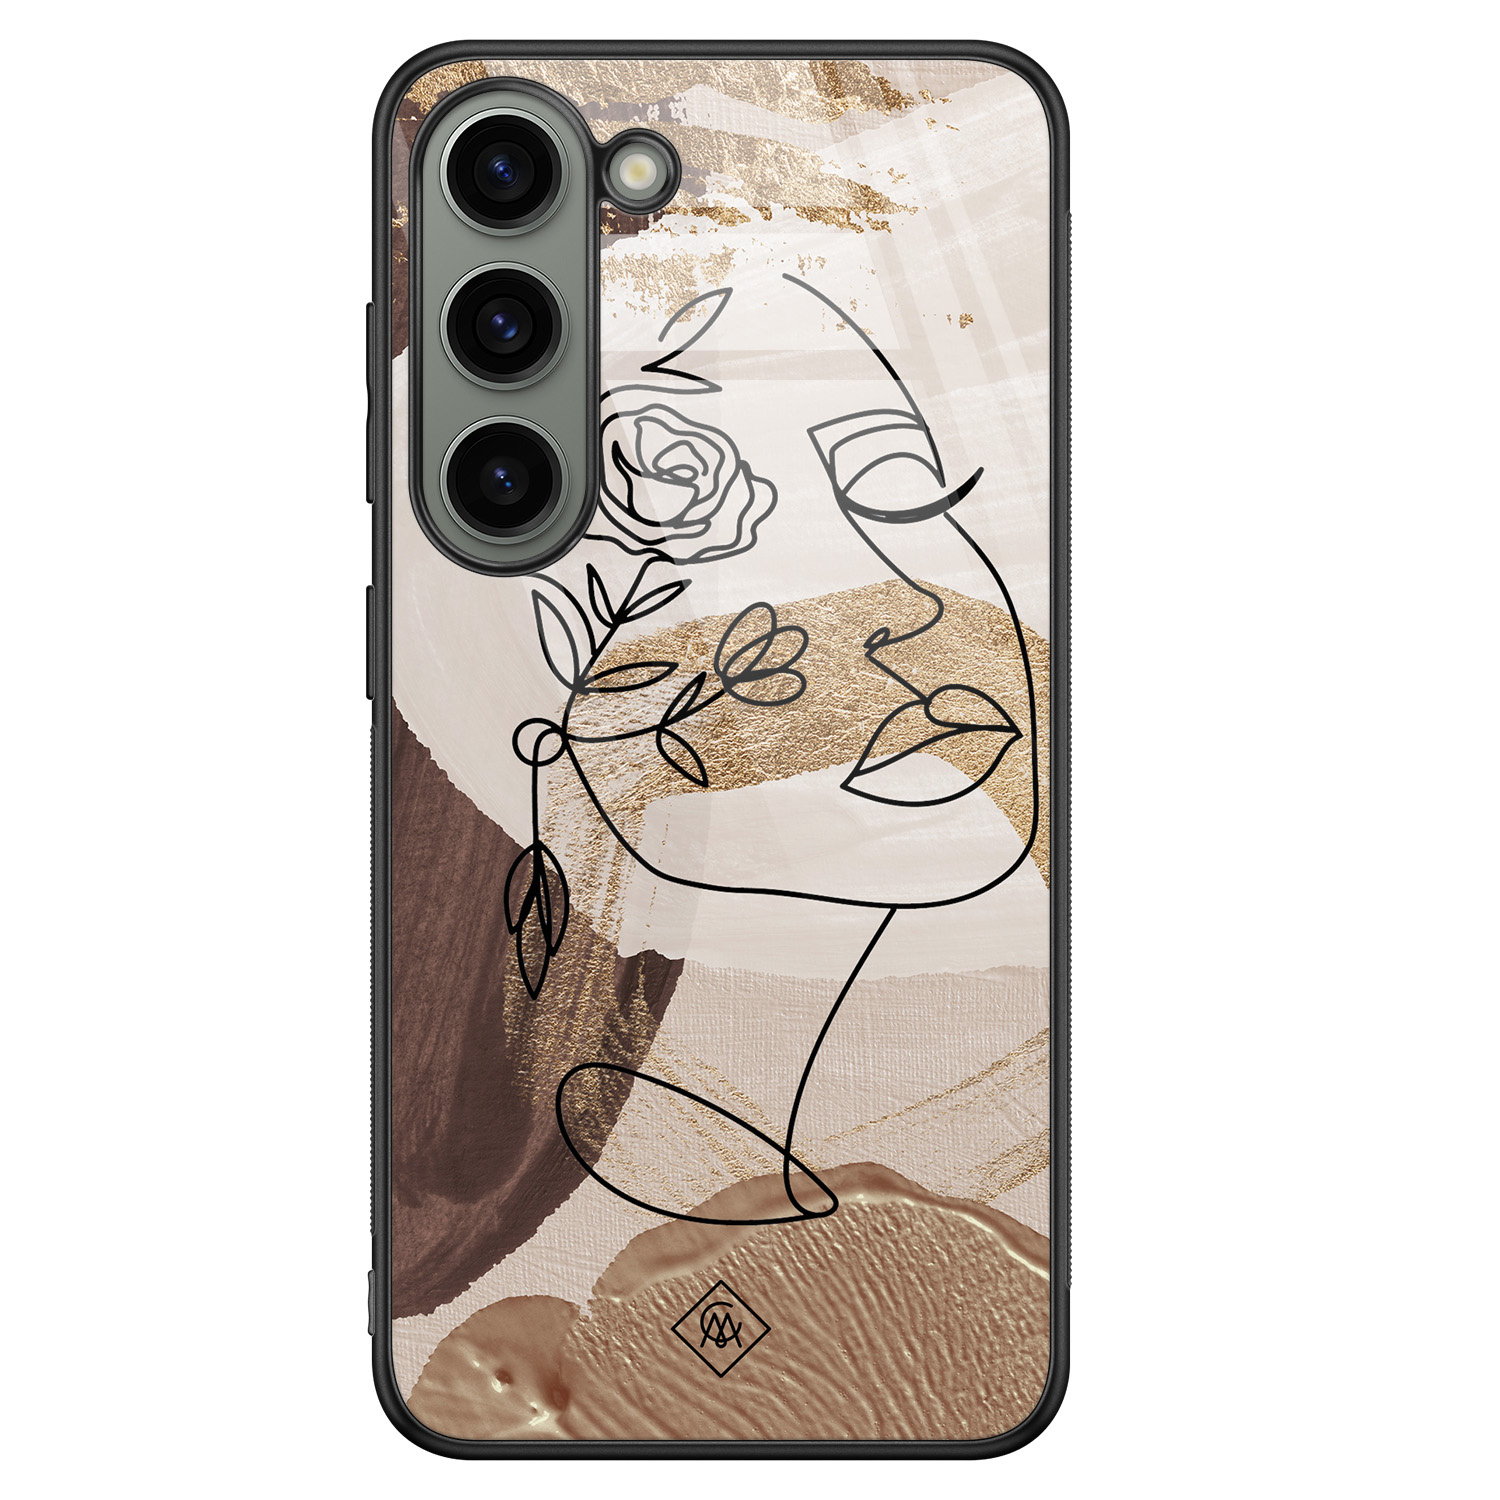 Samsung Galaxy S23 hoesje glas - Abstract gezicht bruin - Bruin/beige - Hard Case Zwart - Backcover telefoonhoesje - Geometrisch patroon - Casimoda